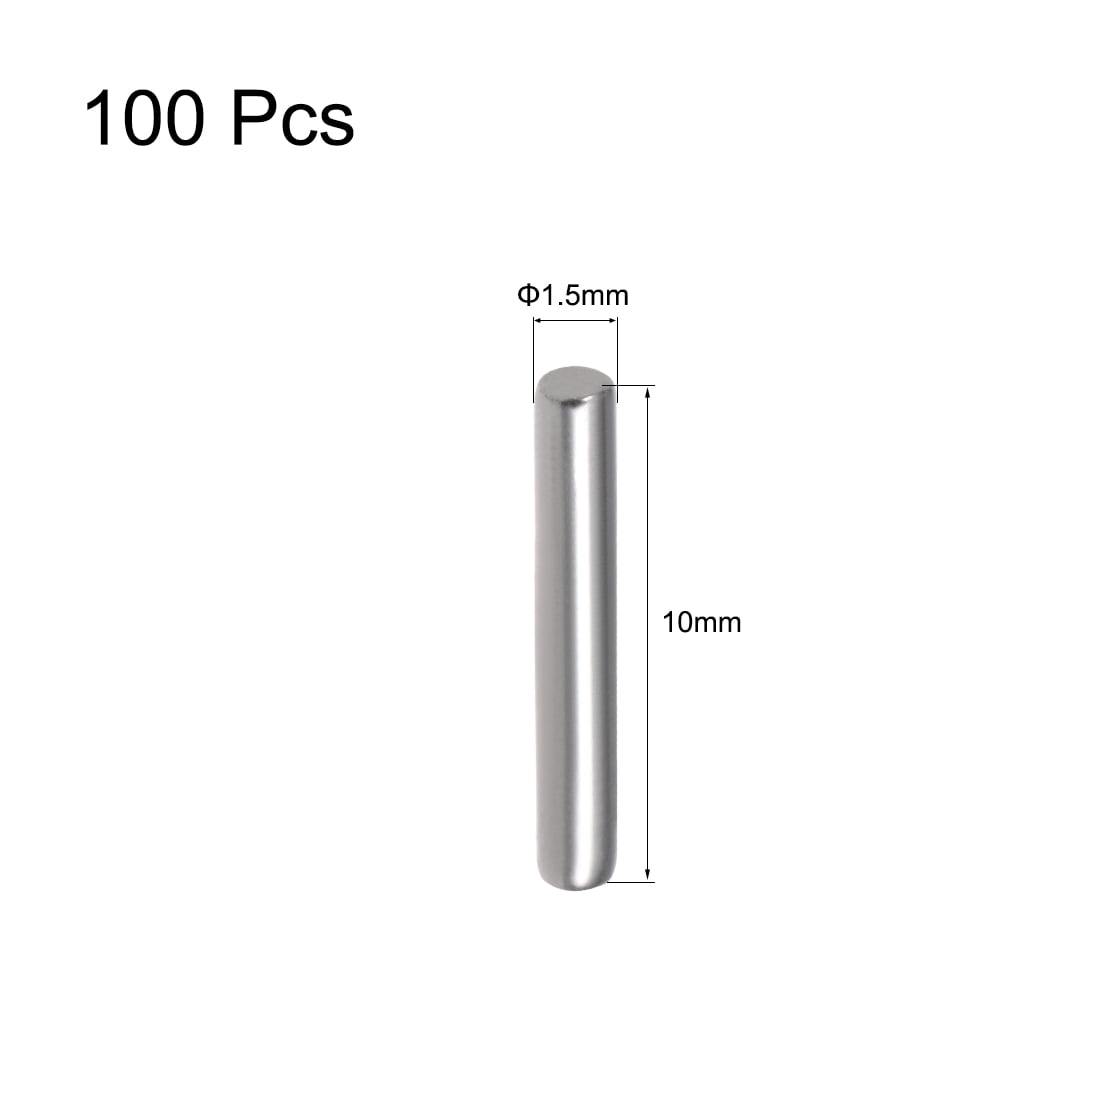 100Pcs 1.5mm x 10mm Dowel Pin 304 Stainless Steel Shelf Pin Fasten Elements 714998753359 